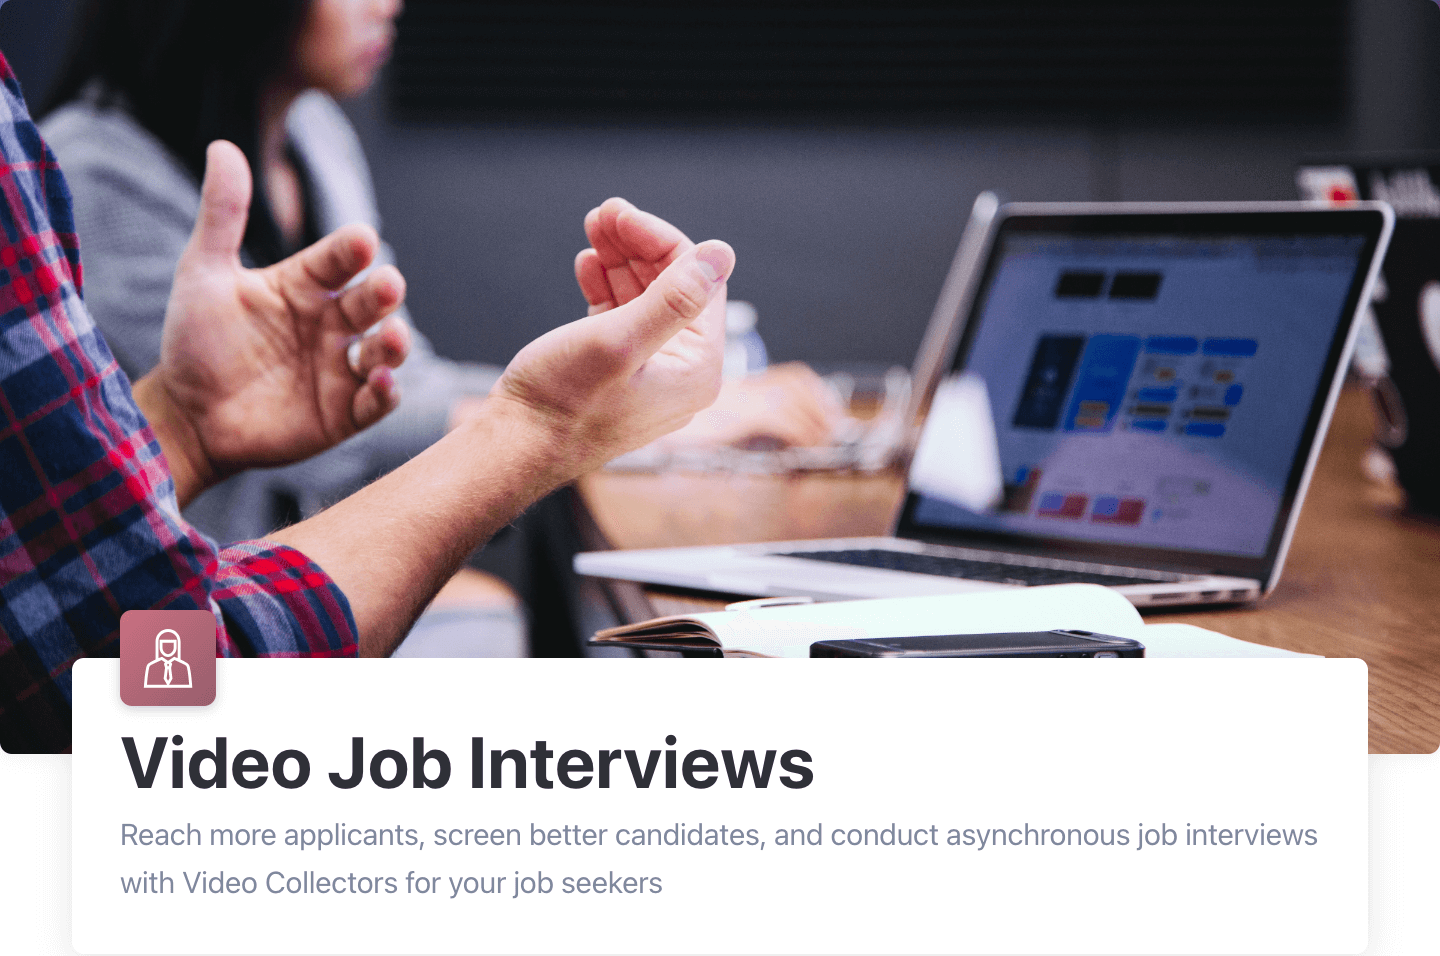 Video job interviews. 